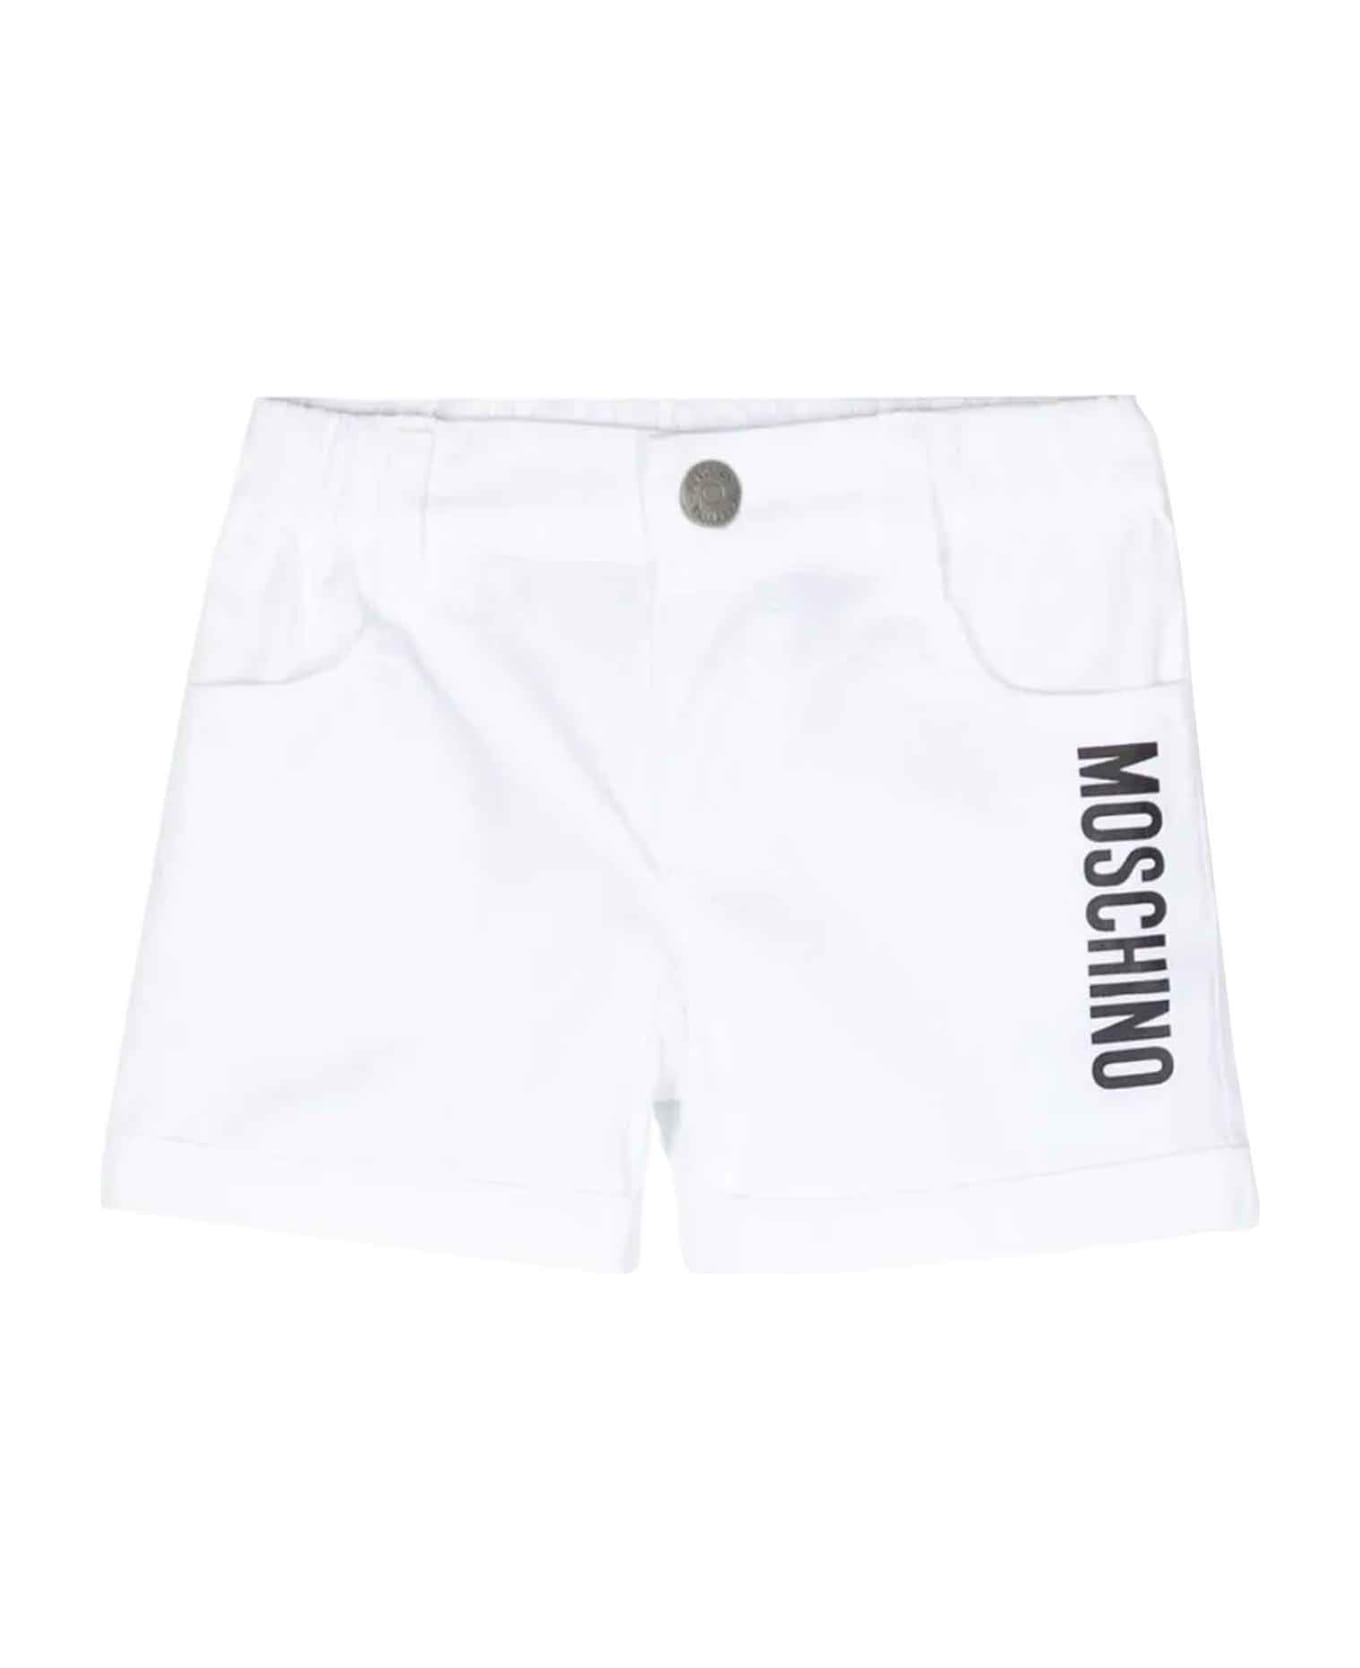 Moschino White Shorts Baby Unisex - Bianco